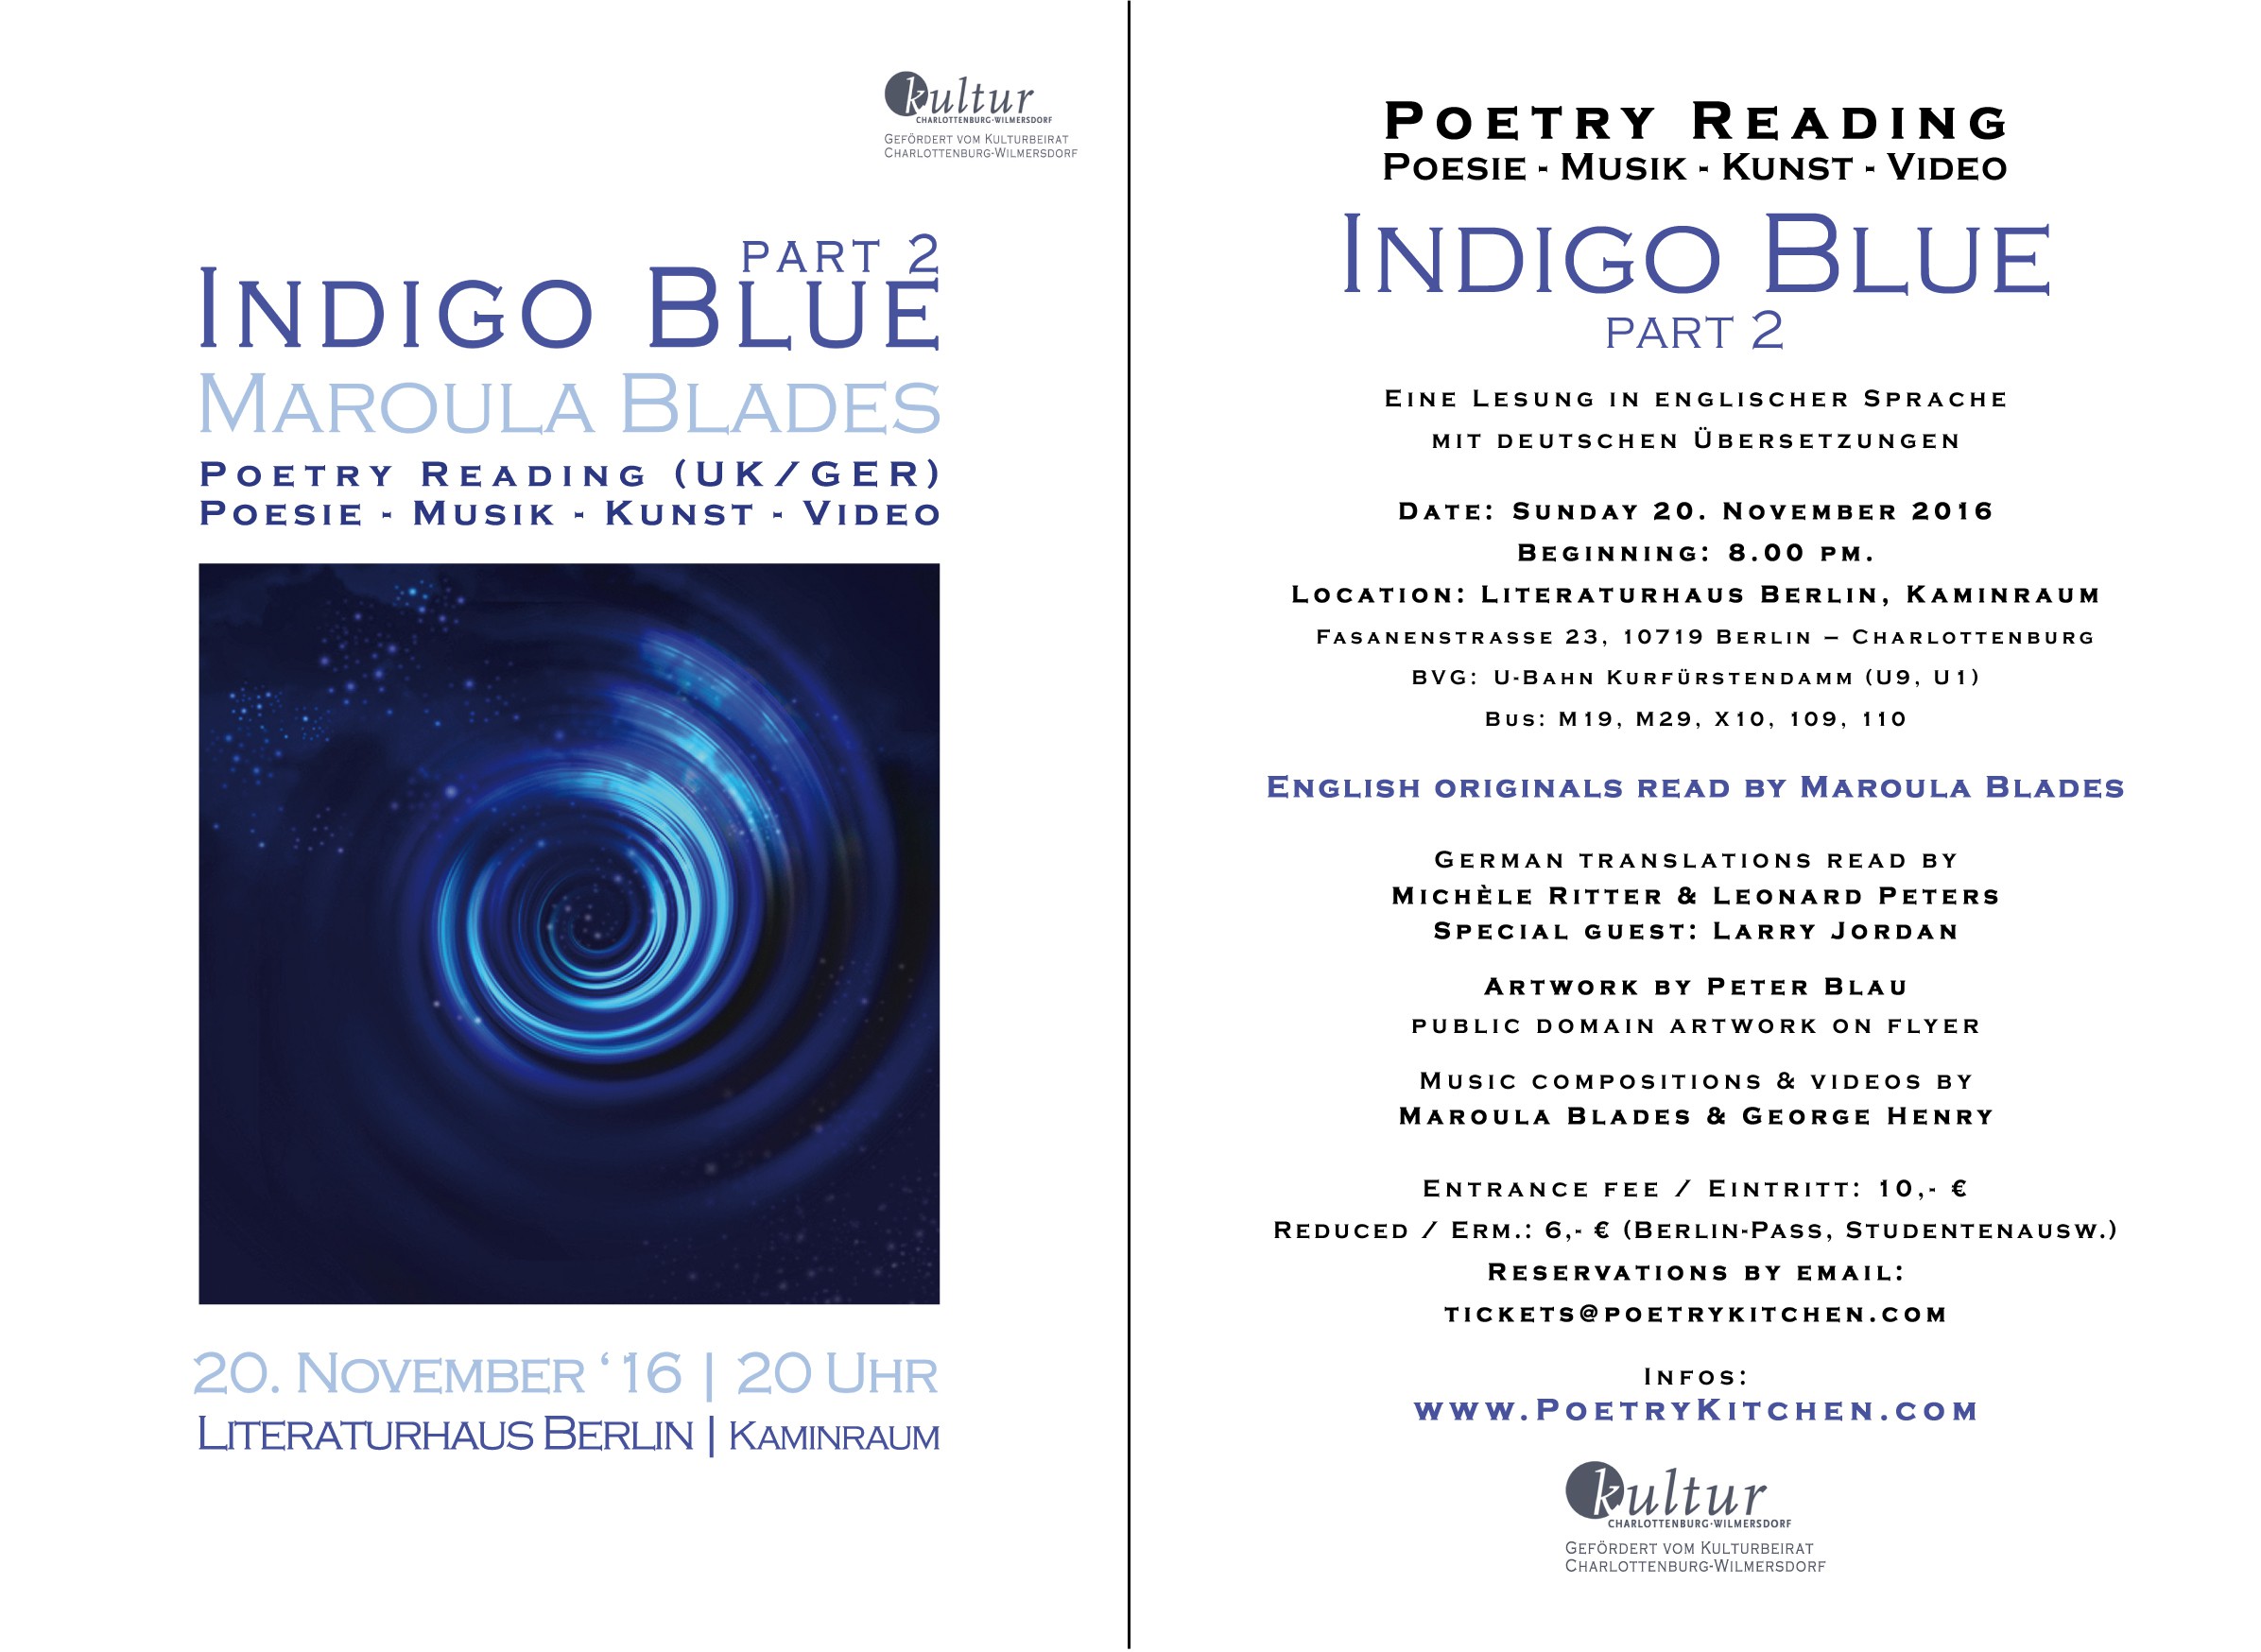 email flyer - Maroula Blades - INDIGO BLUE